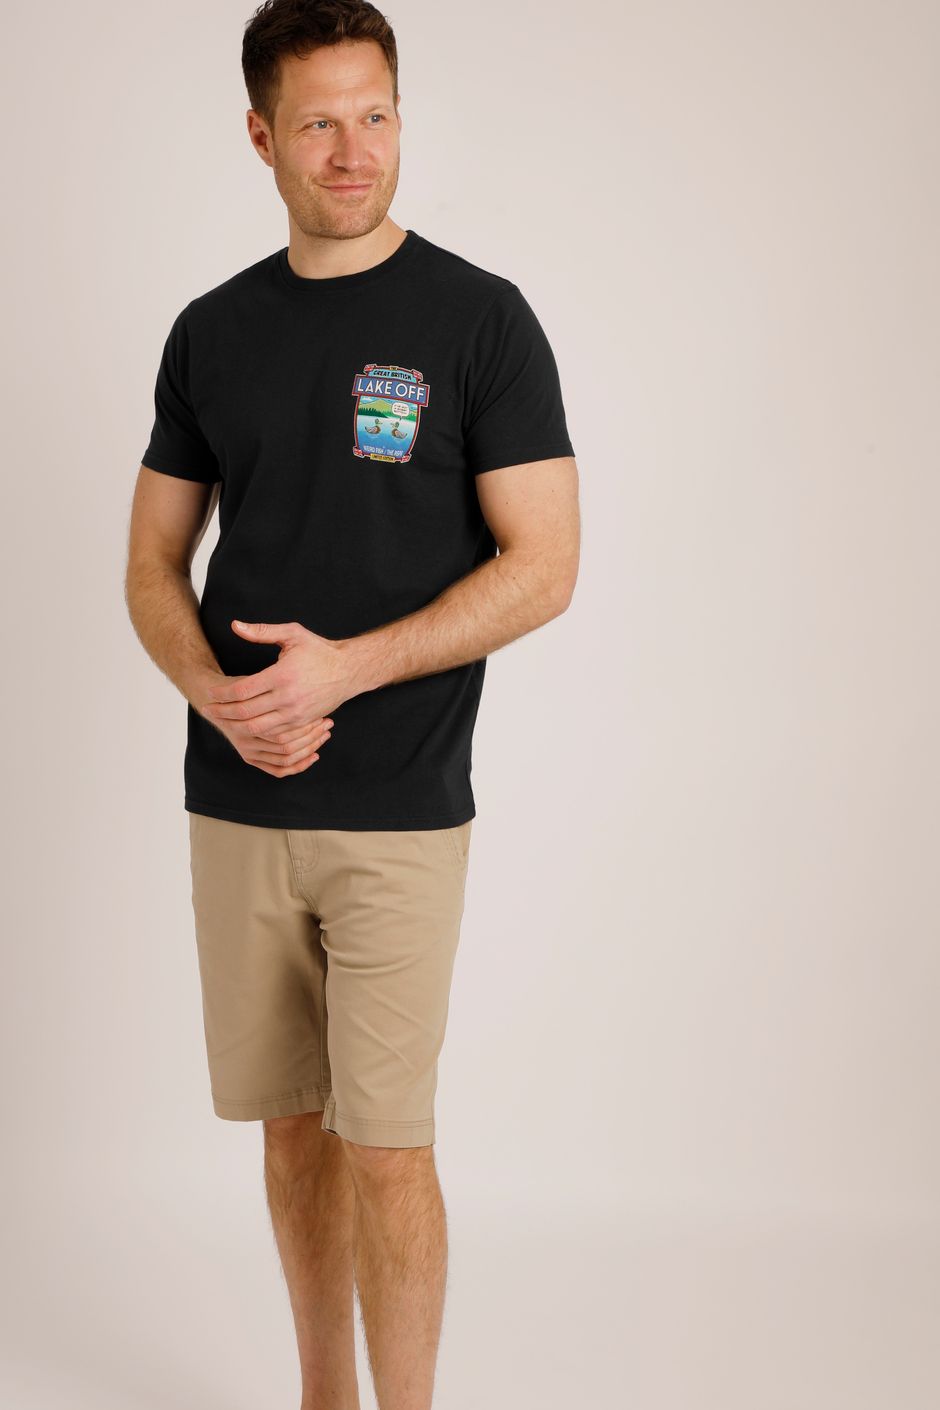 Lake Off Charity Artist T-Shirt RSPB Navy